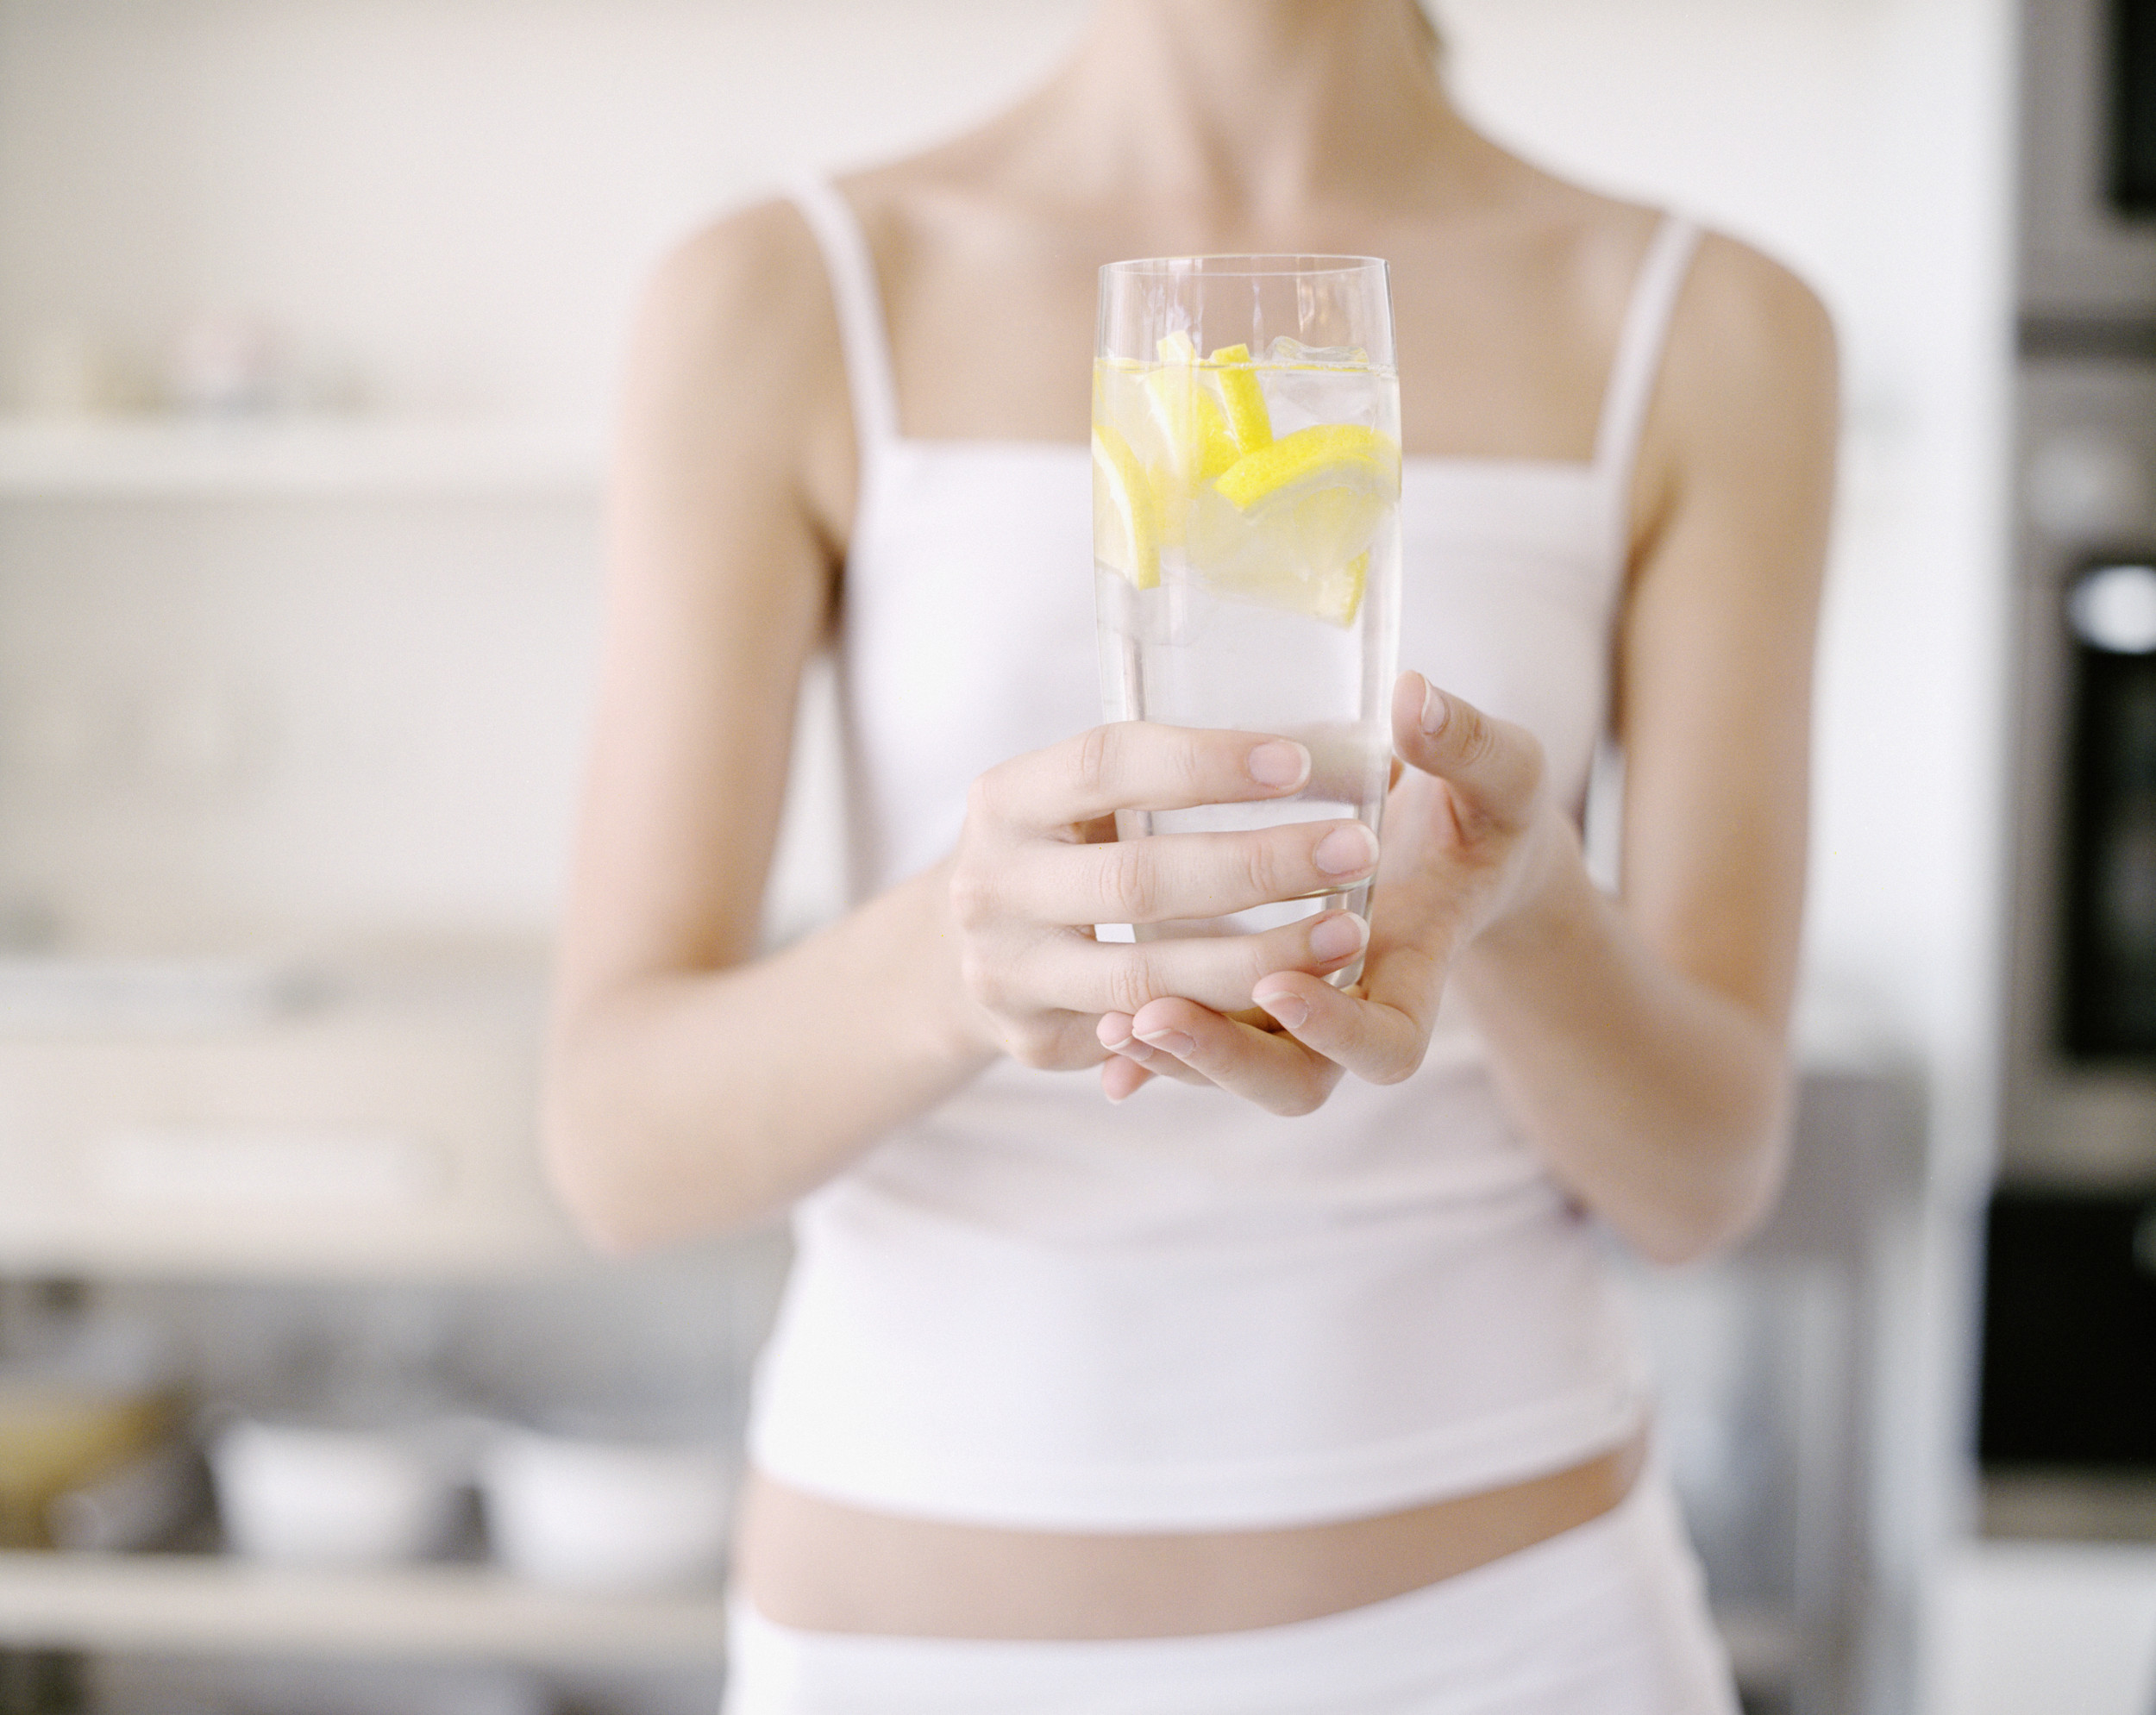 Полезна ли вода натощак по утрам. Девушка со стаканом воды. Девушка пьет воду с лимоном. Девушка с лимоном. Утро девушка со стаканом воды.